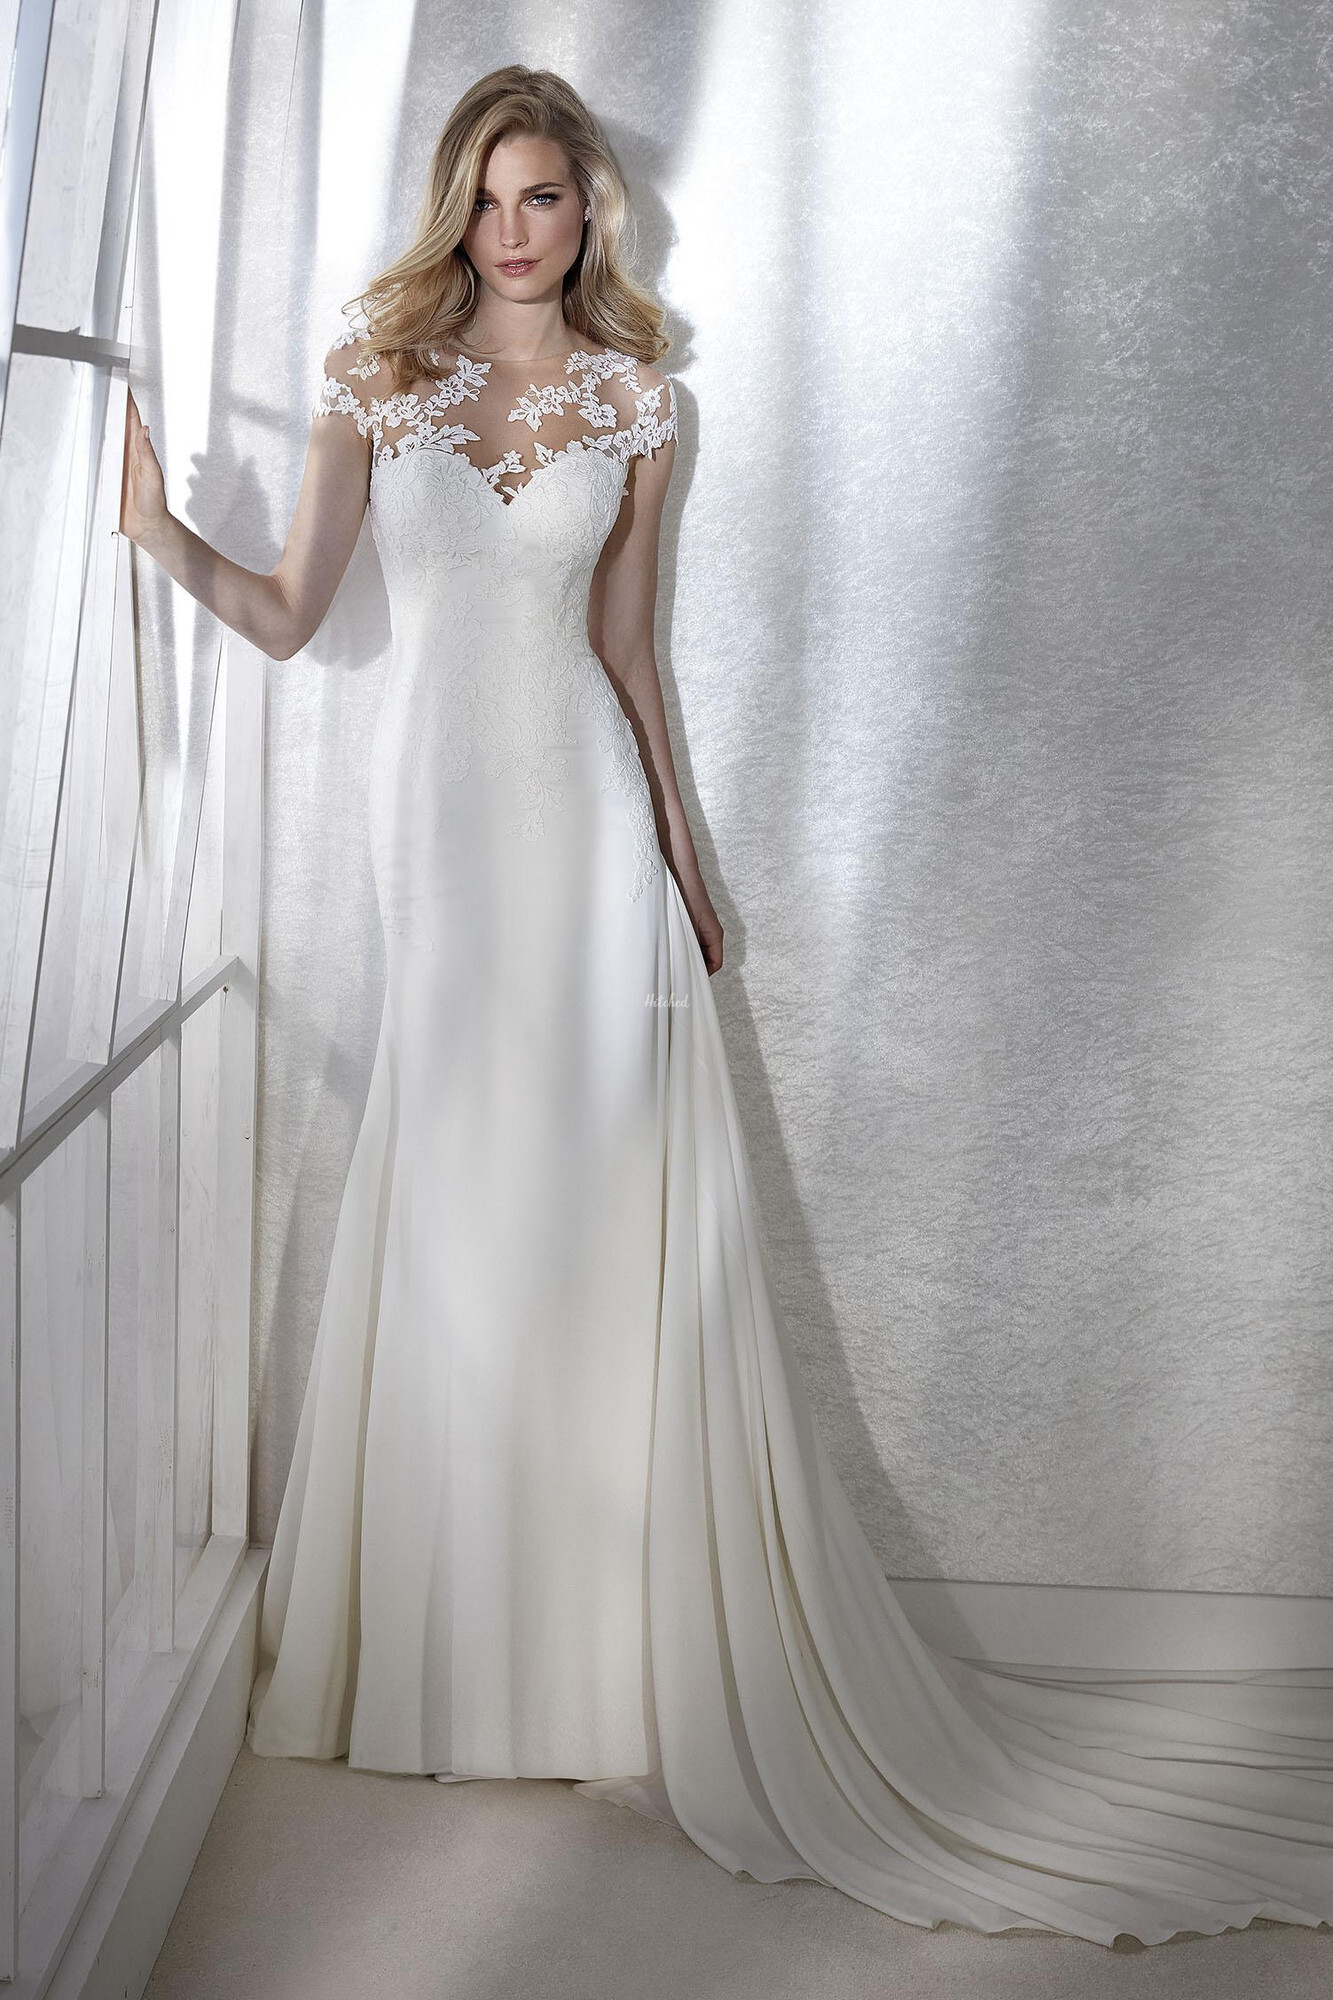 Finlandia Wedding Dress From White One Uk 